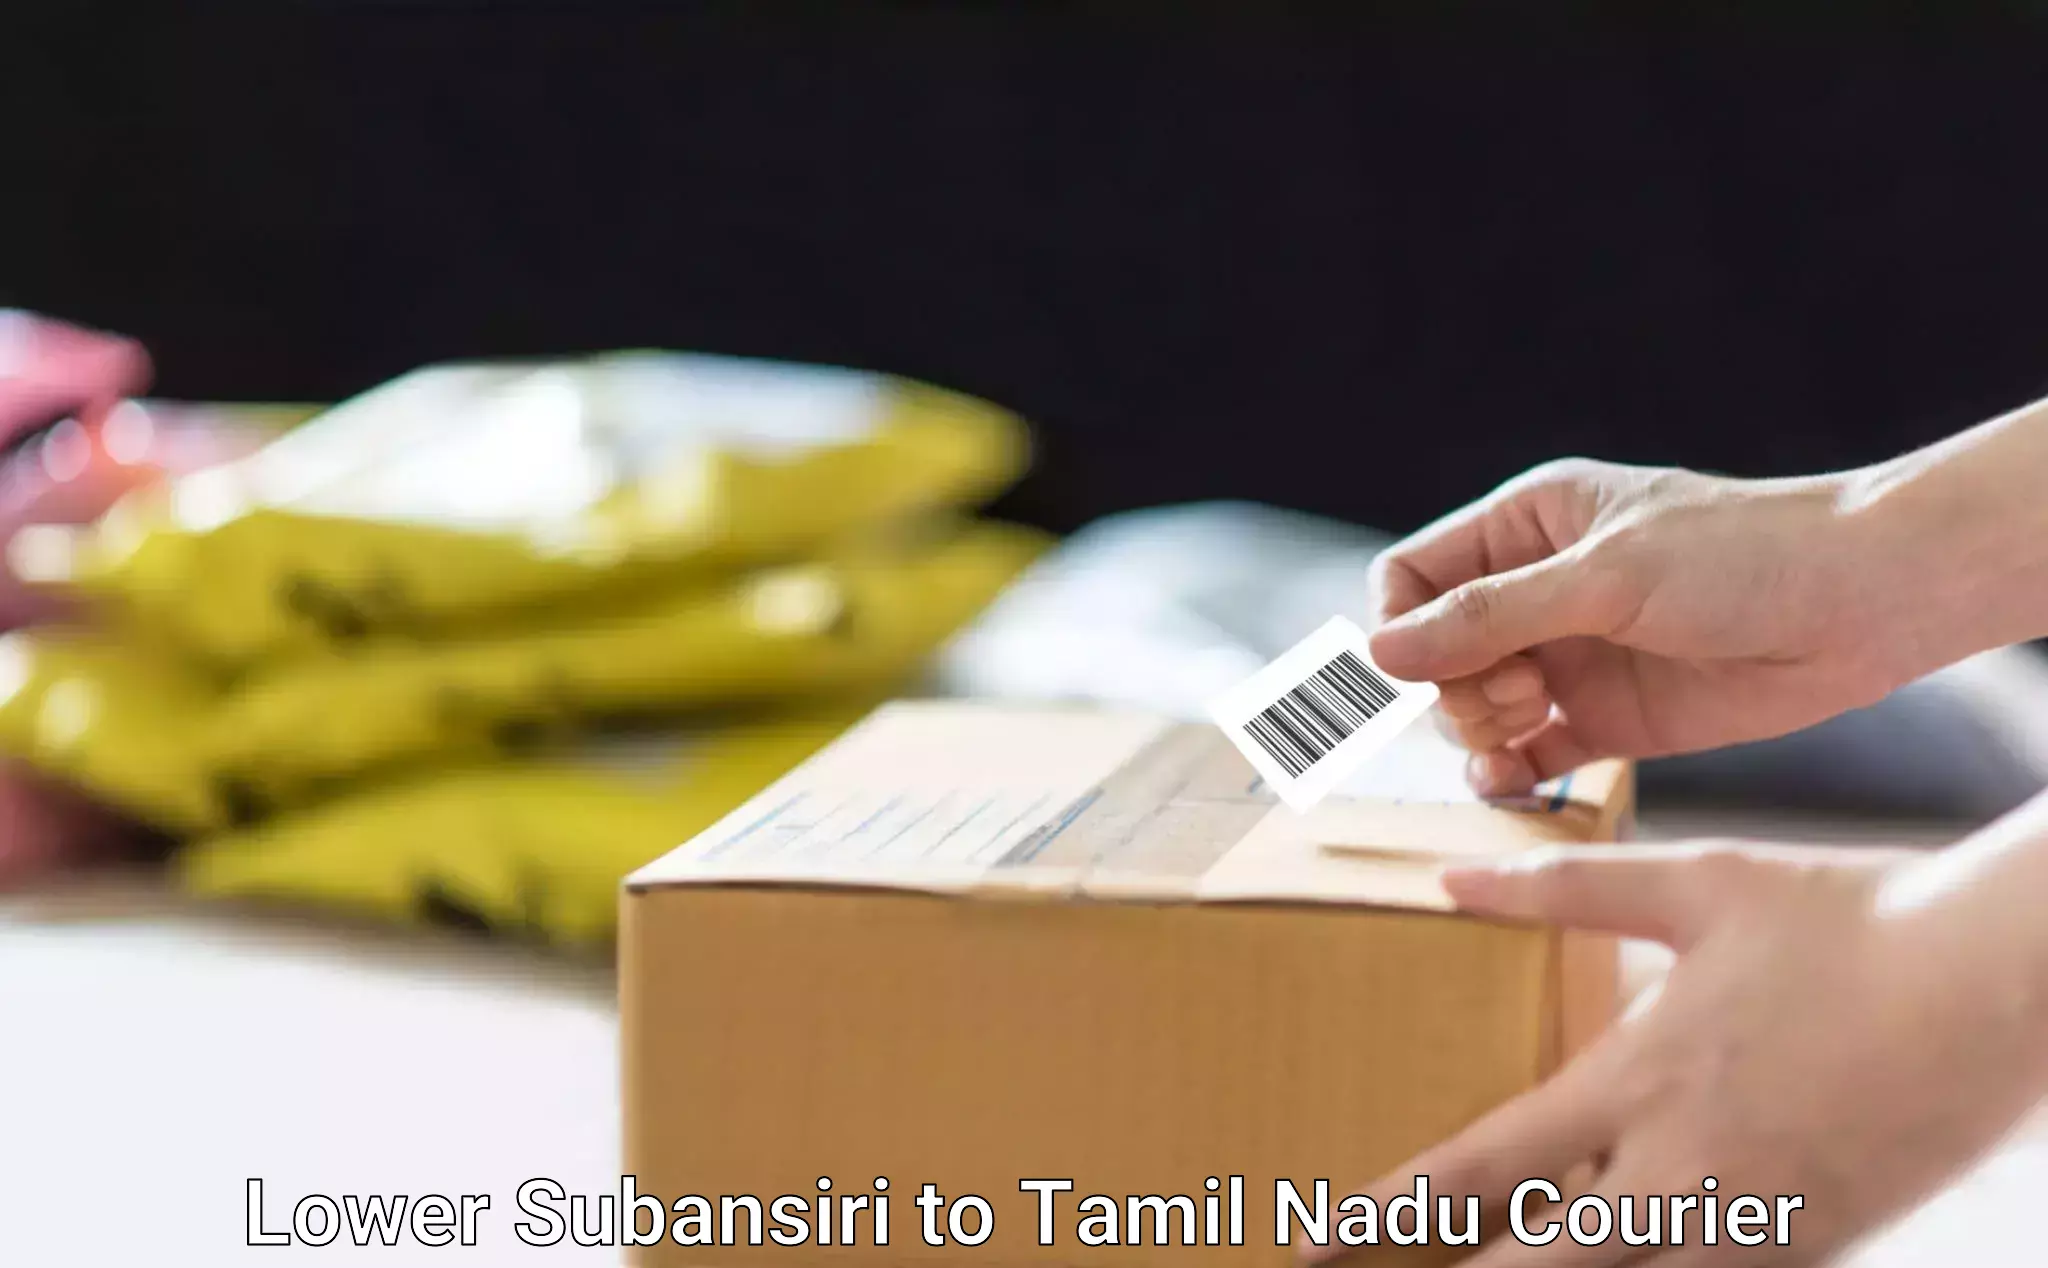 Custom courier packaging Lower Subansiri to Velur